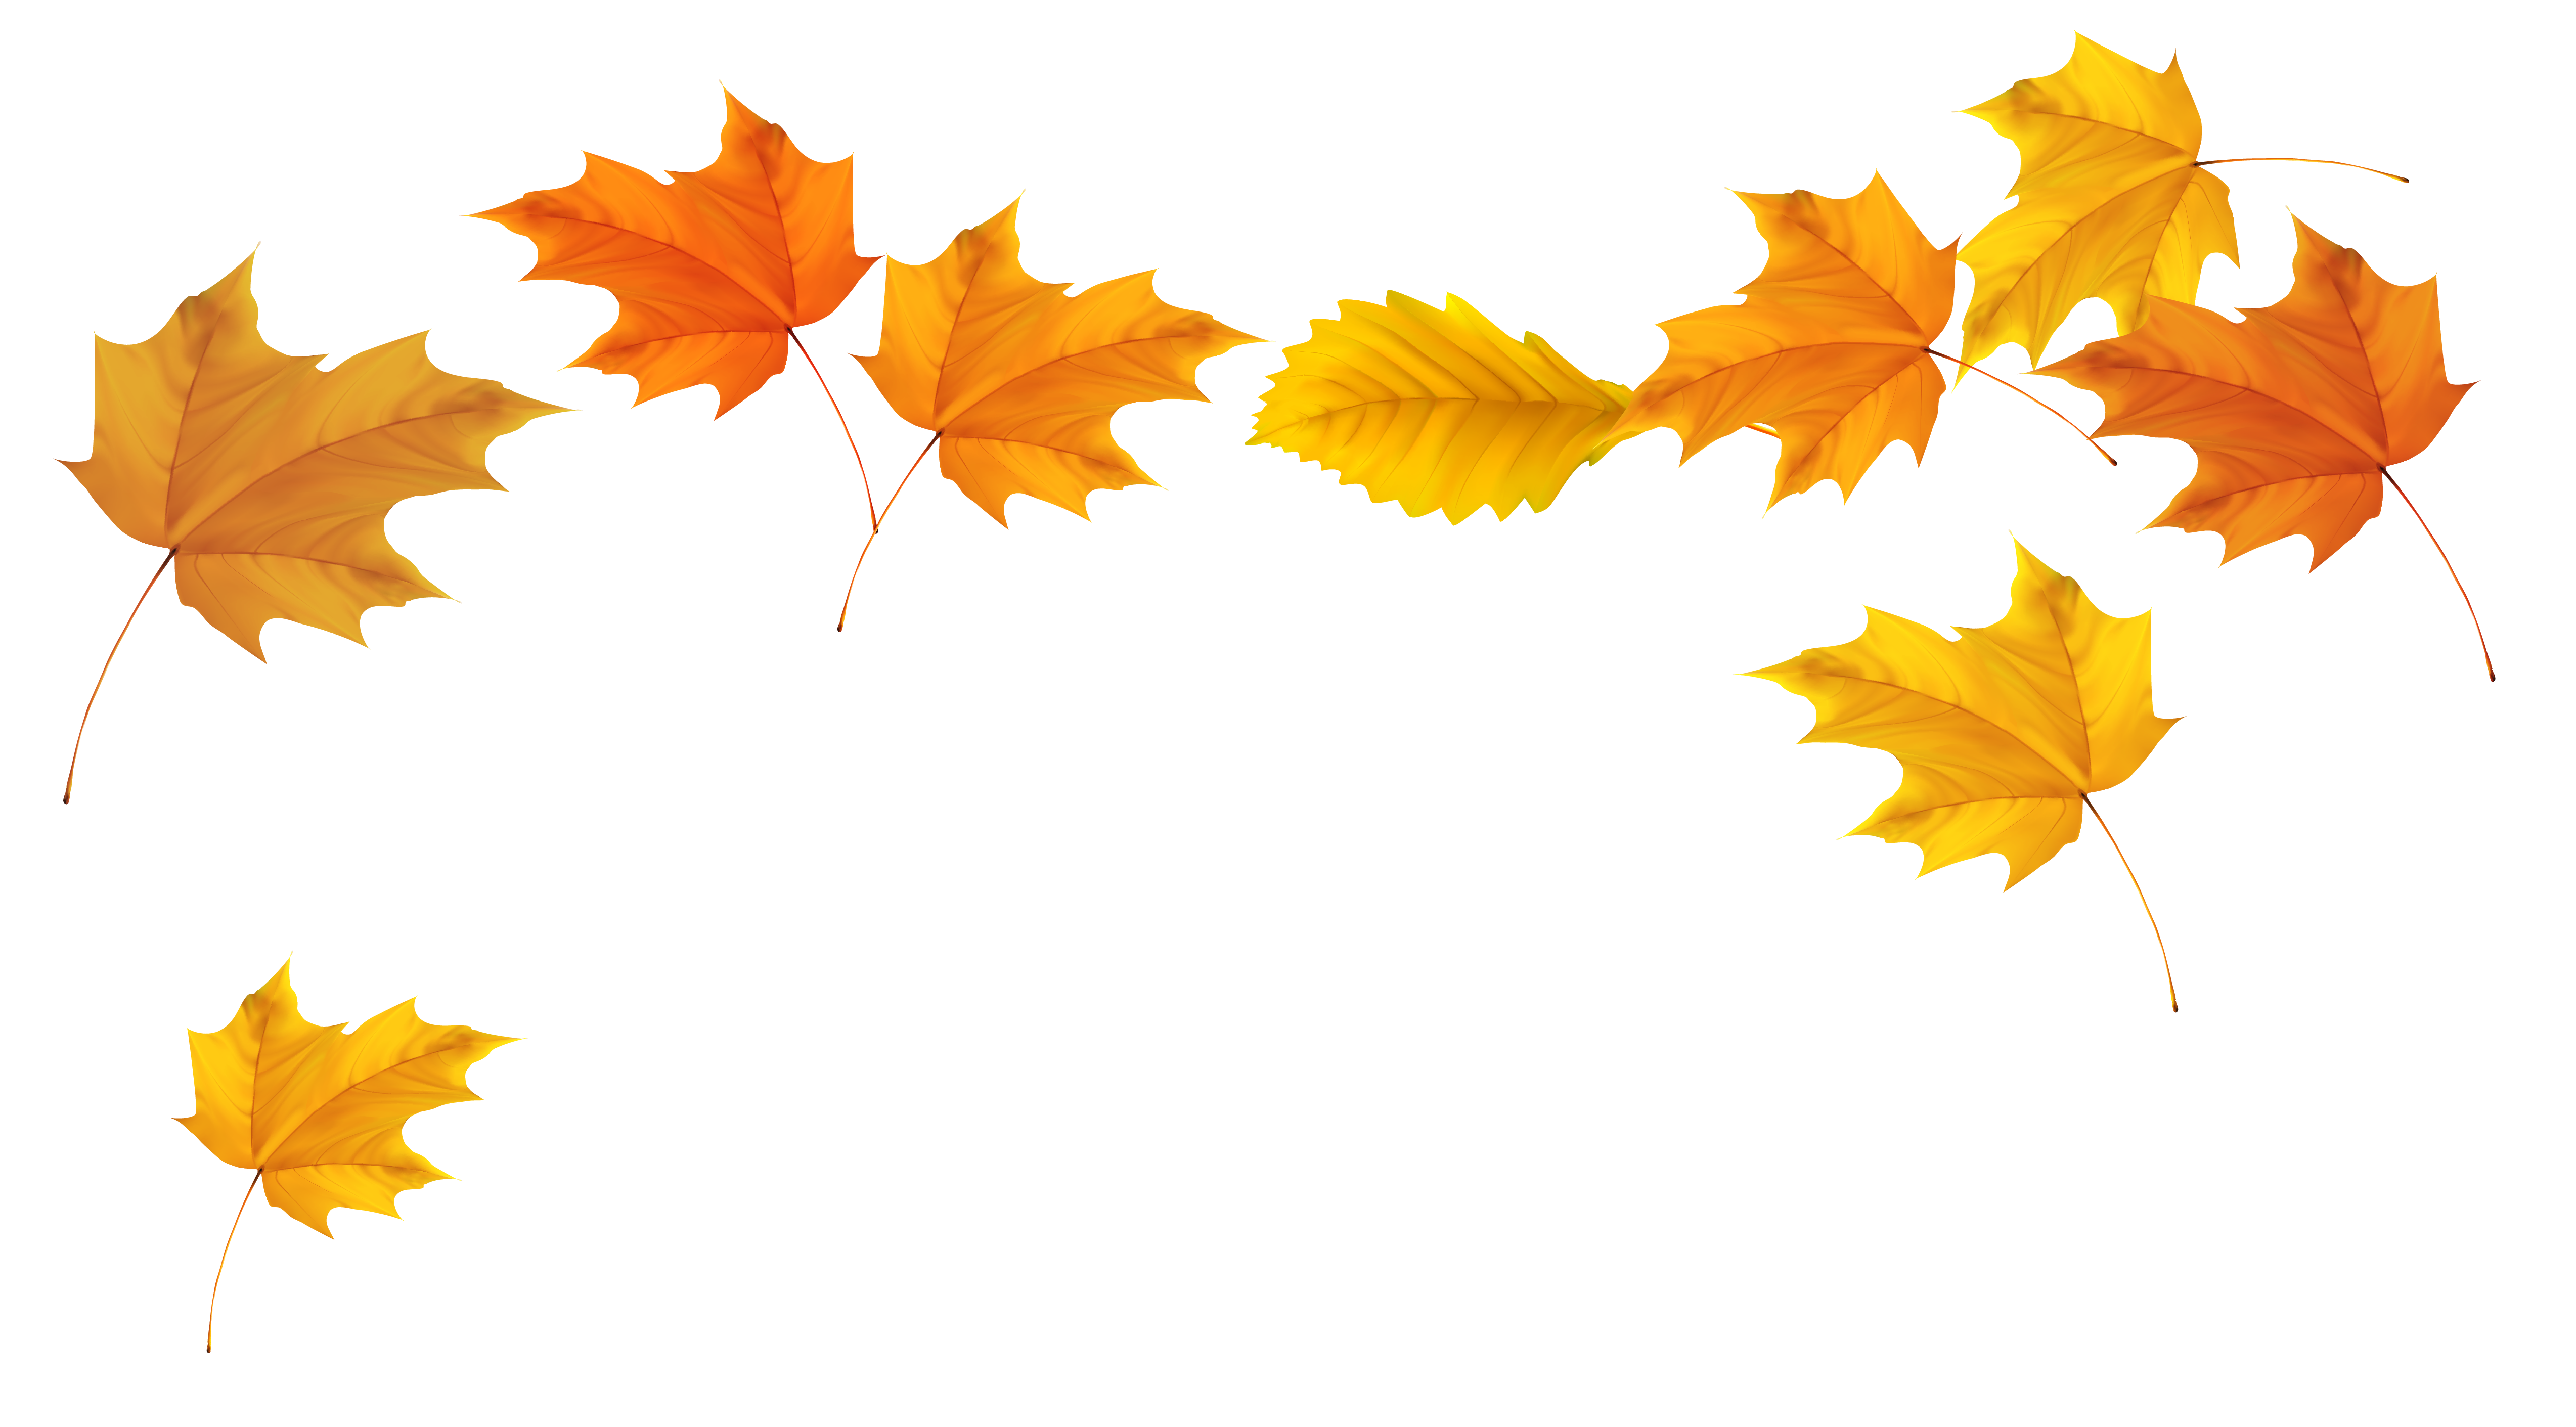 autumn leaf clip art #7